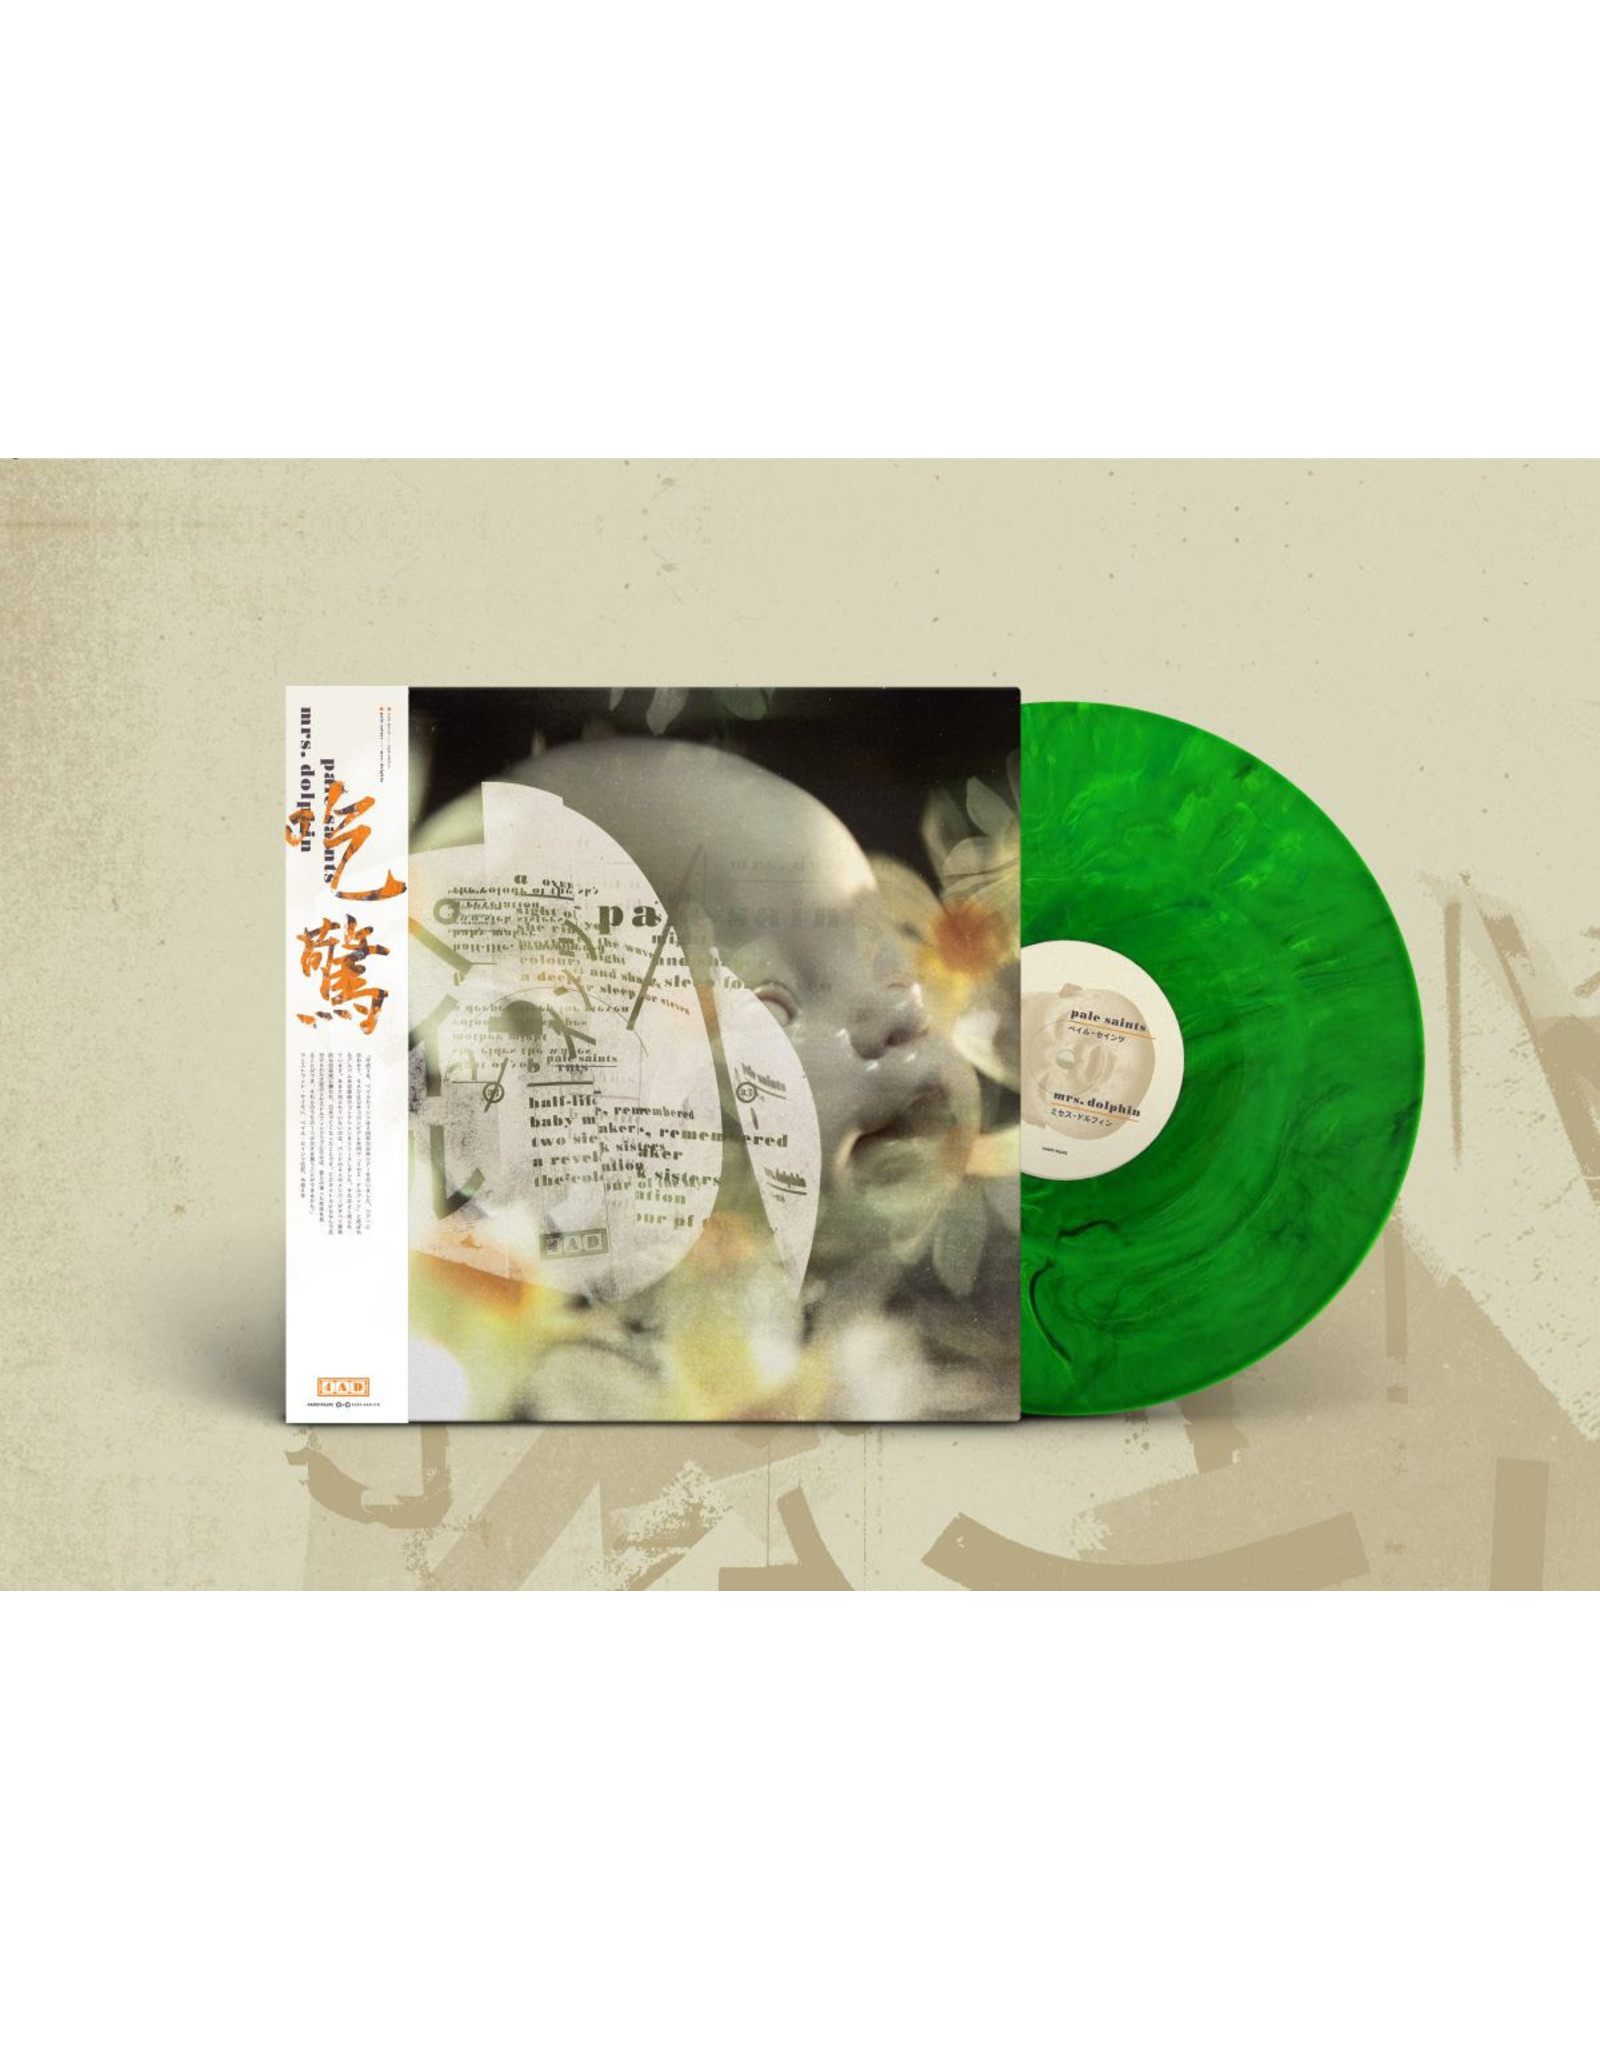 Pale Saints - Mrs. Dolphin (Greatest Hits) [Green Vinyl]